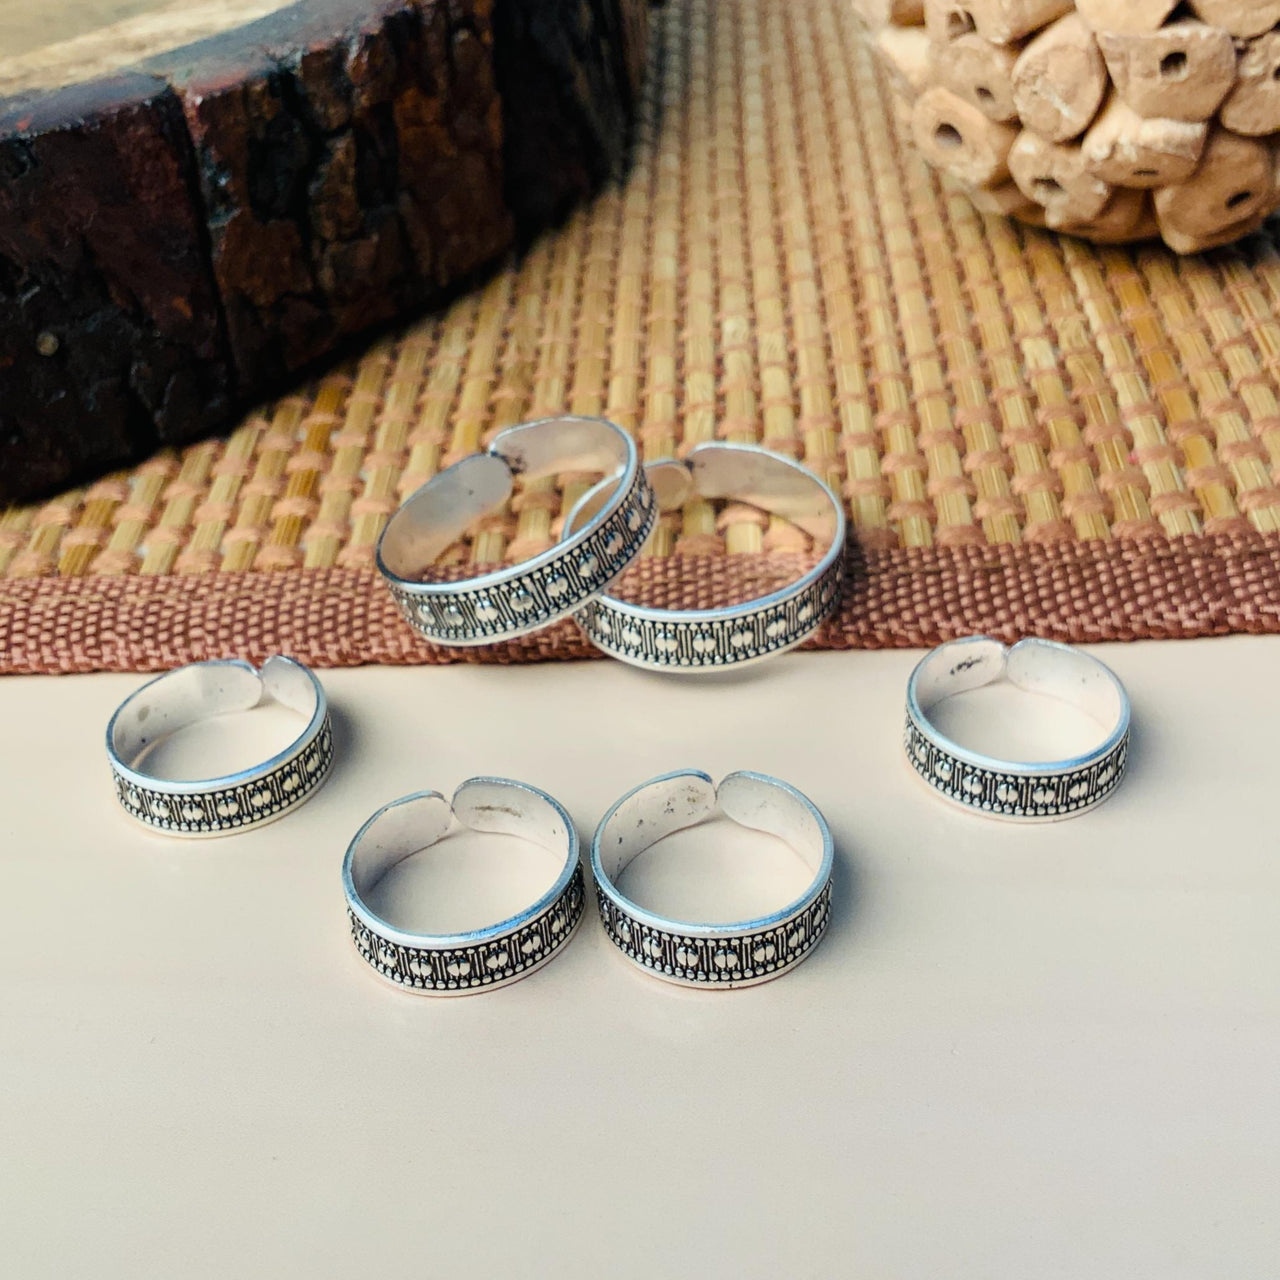 36 Pcs Adjustable Rings Baby Toy Rings Girl Jewelry Rings Set | eBay